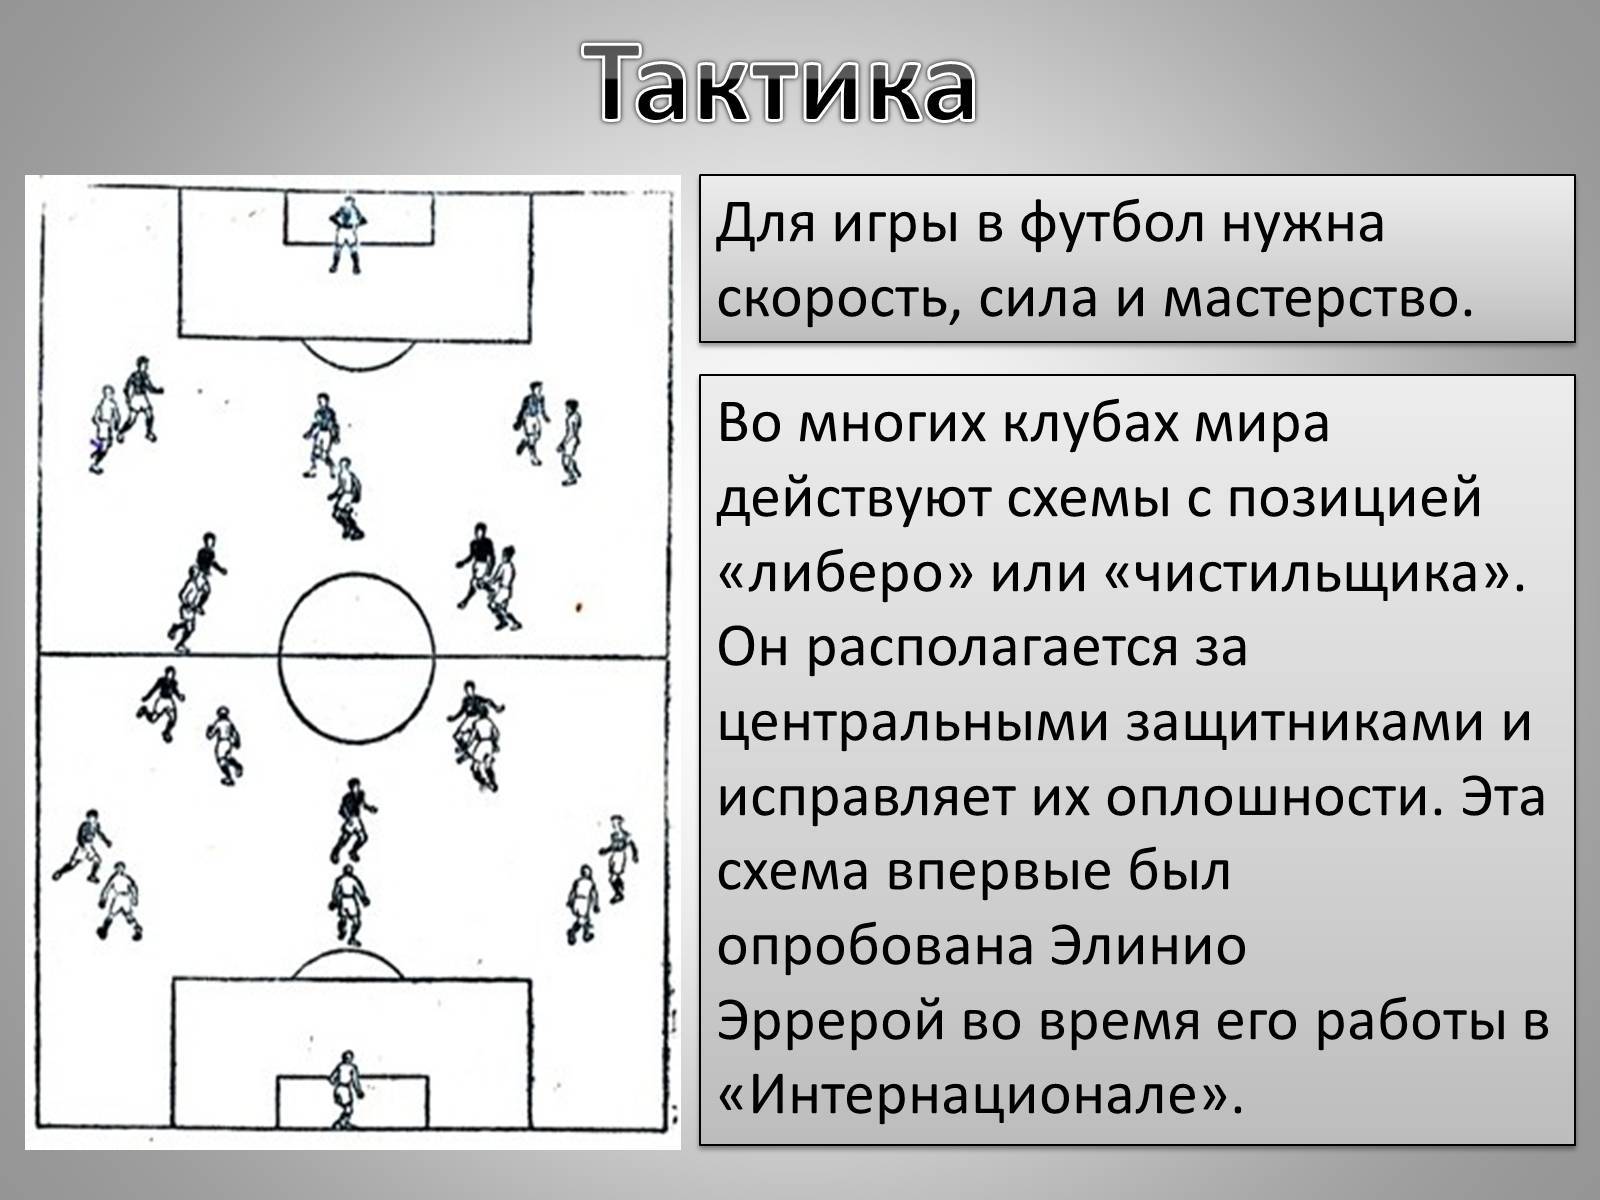 Футбол - тактика игры